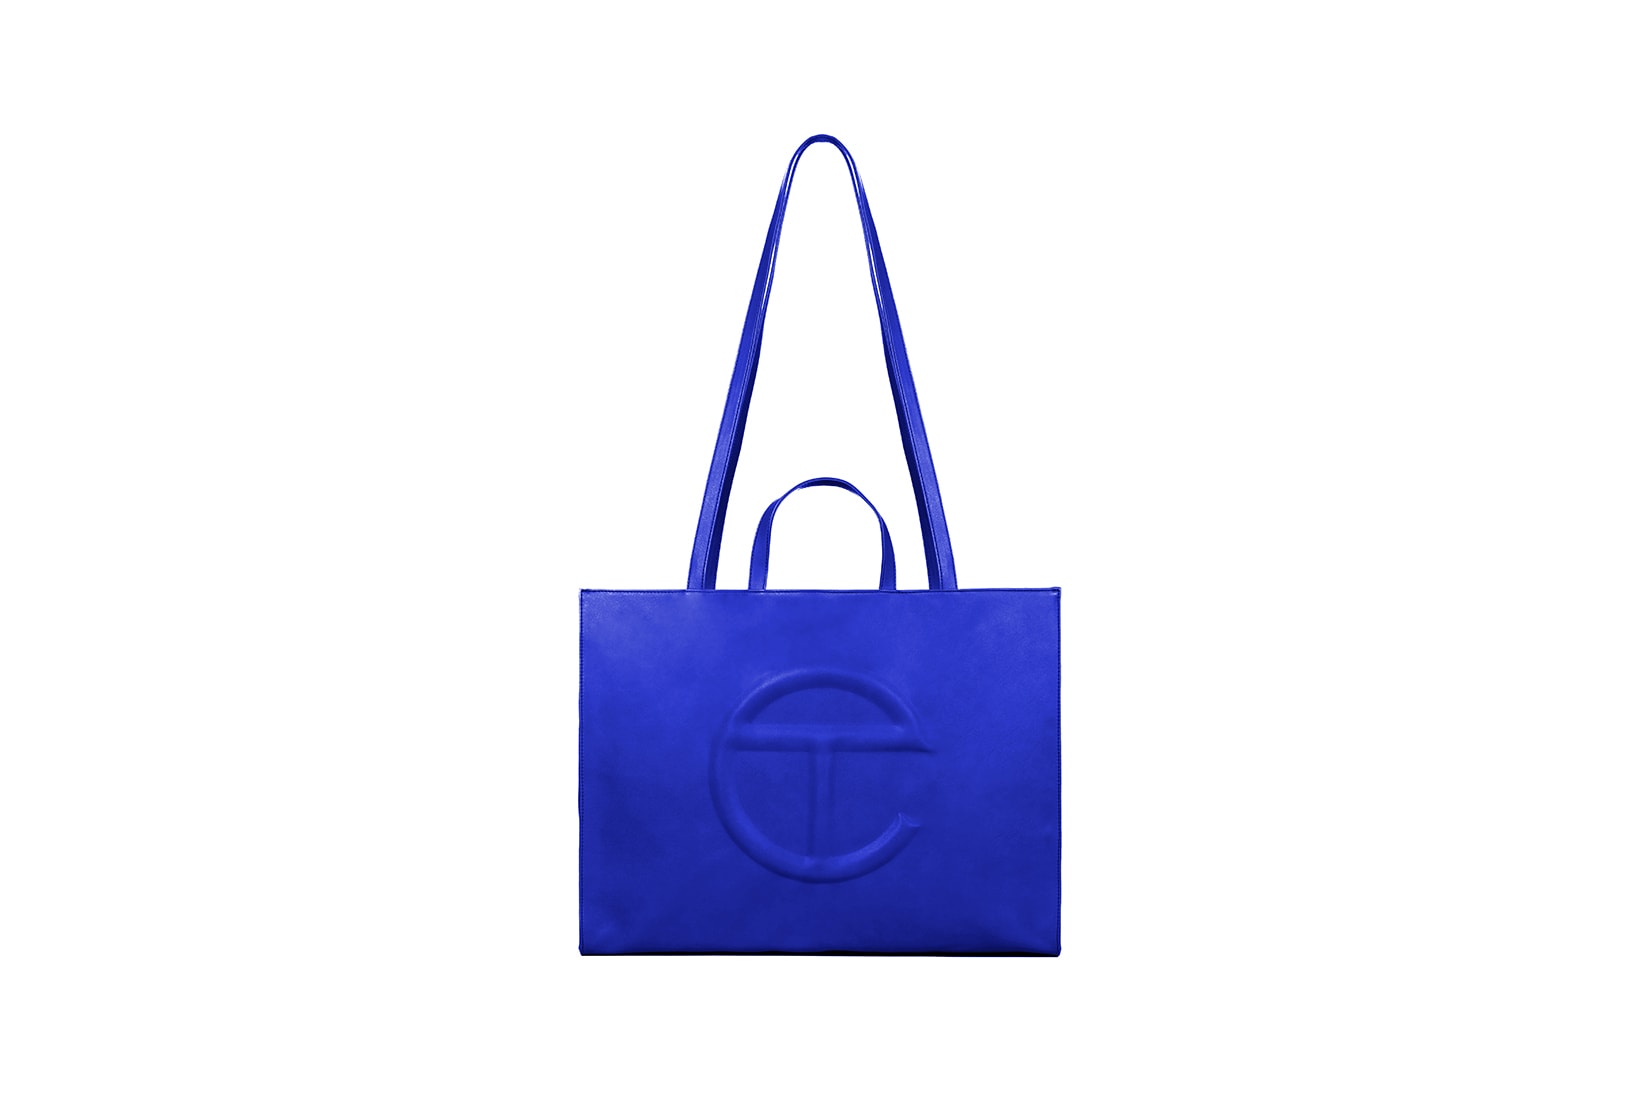 telfar bag blue